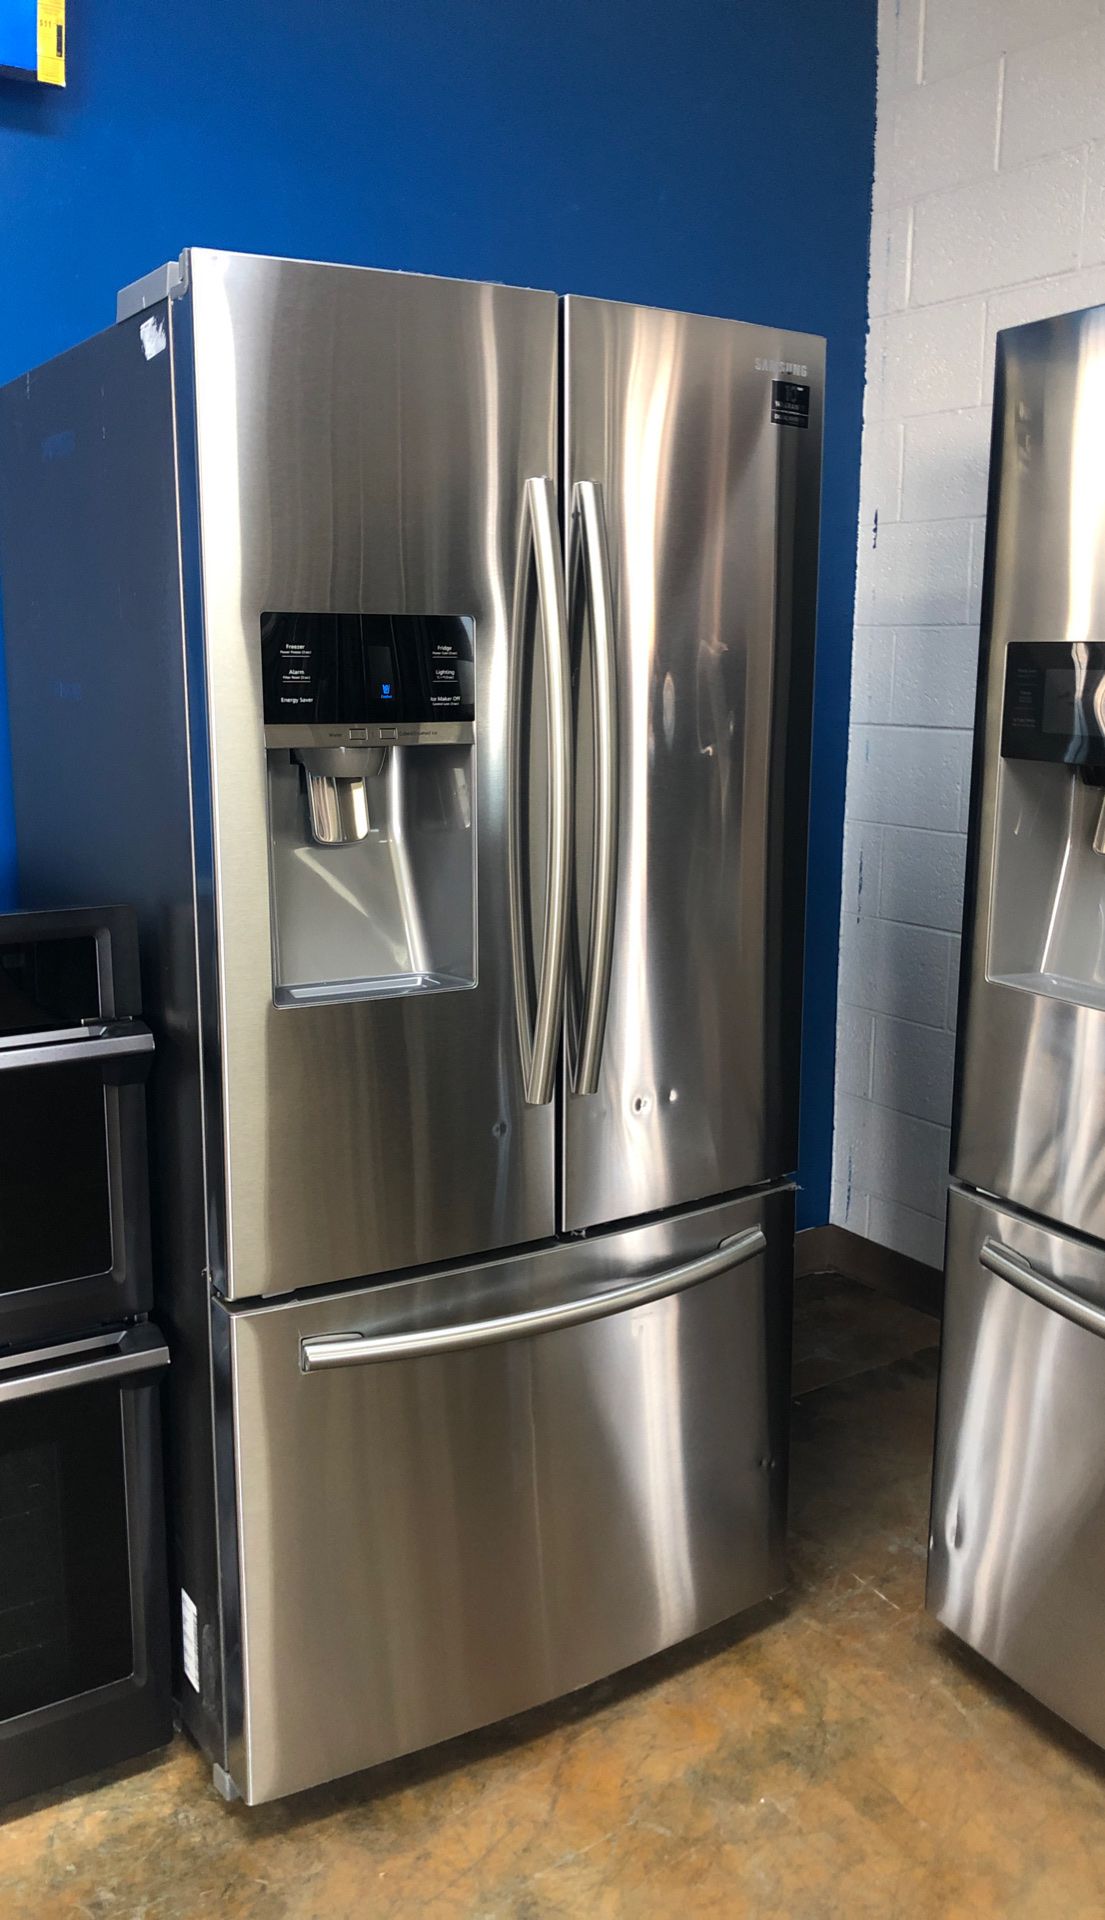 Samsung refrigerator stainless steel refrigerator 33 inches wide